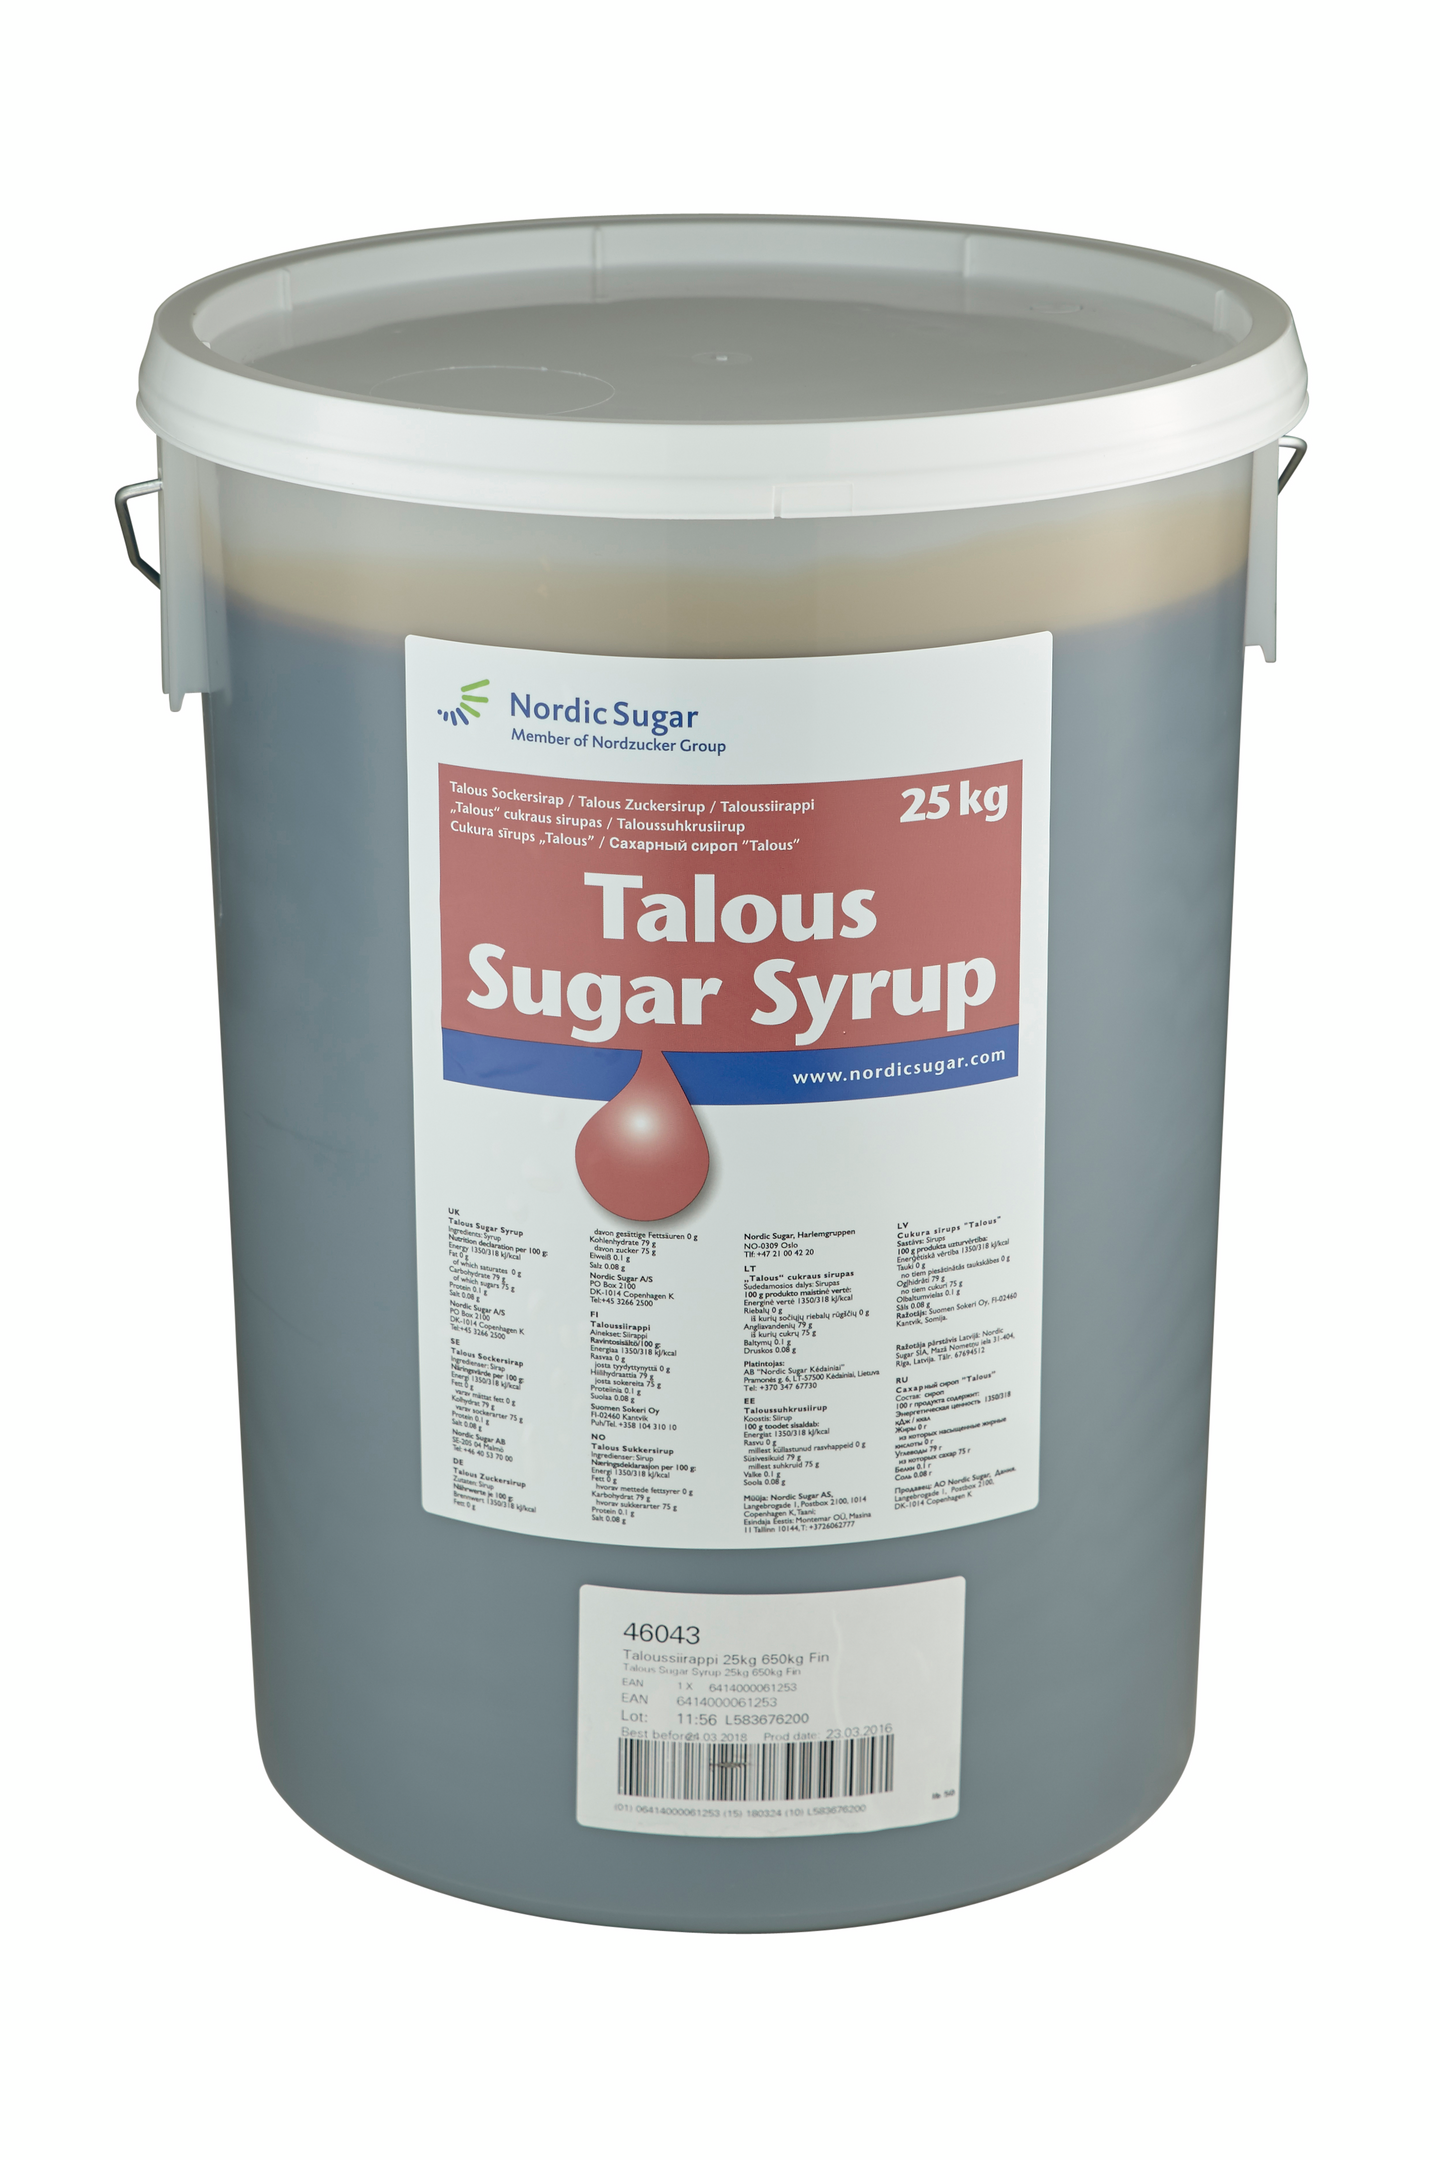 Nordic Sugar 25kg Taloussiirappi